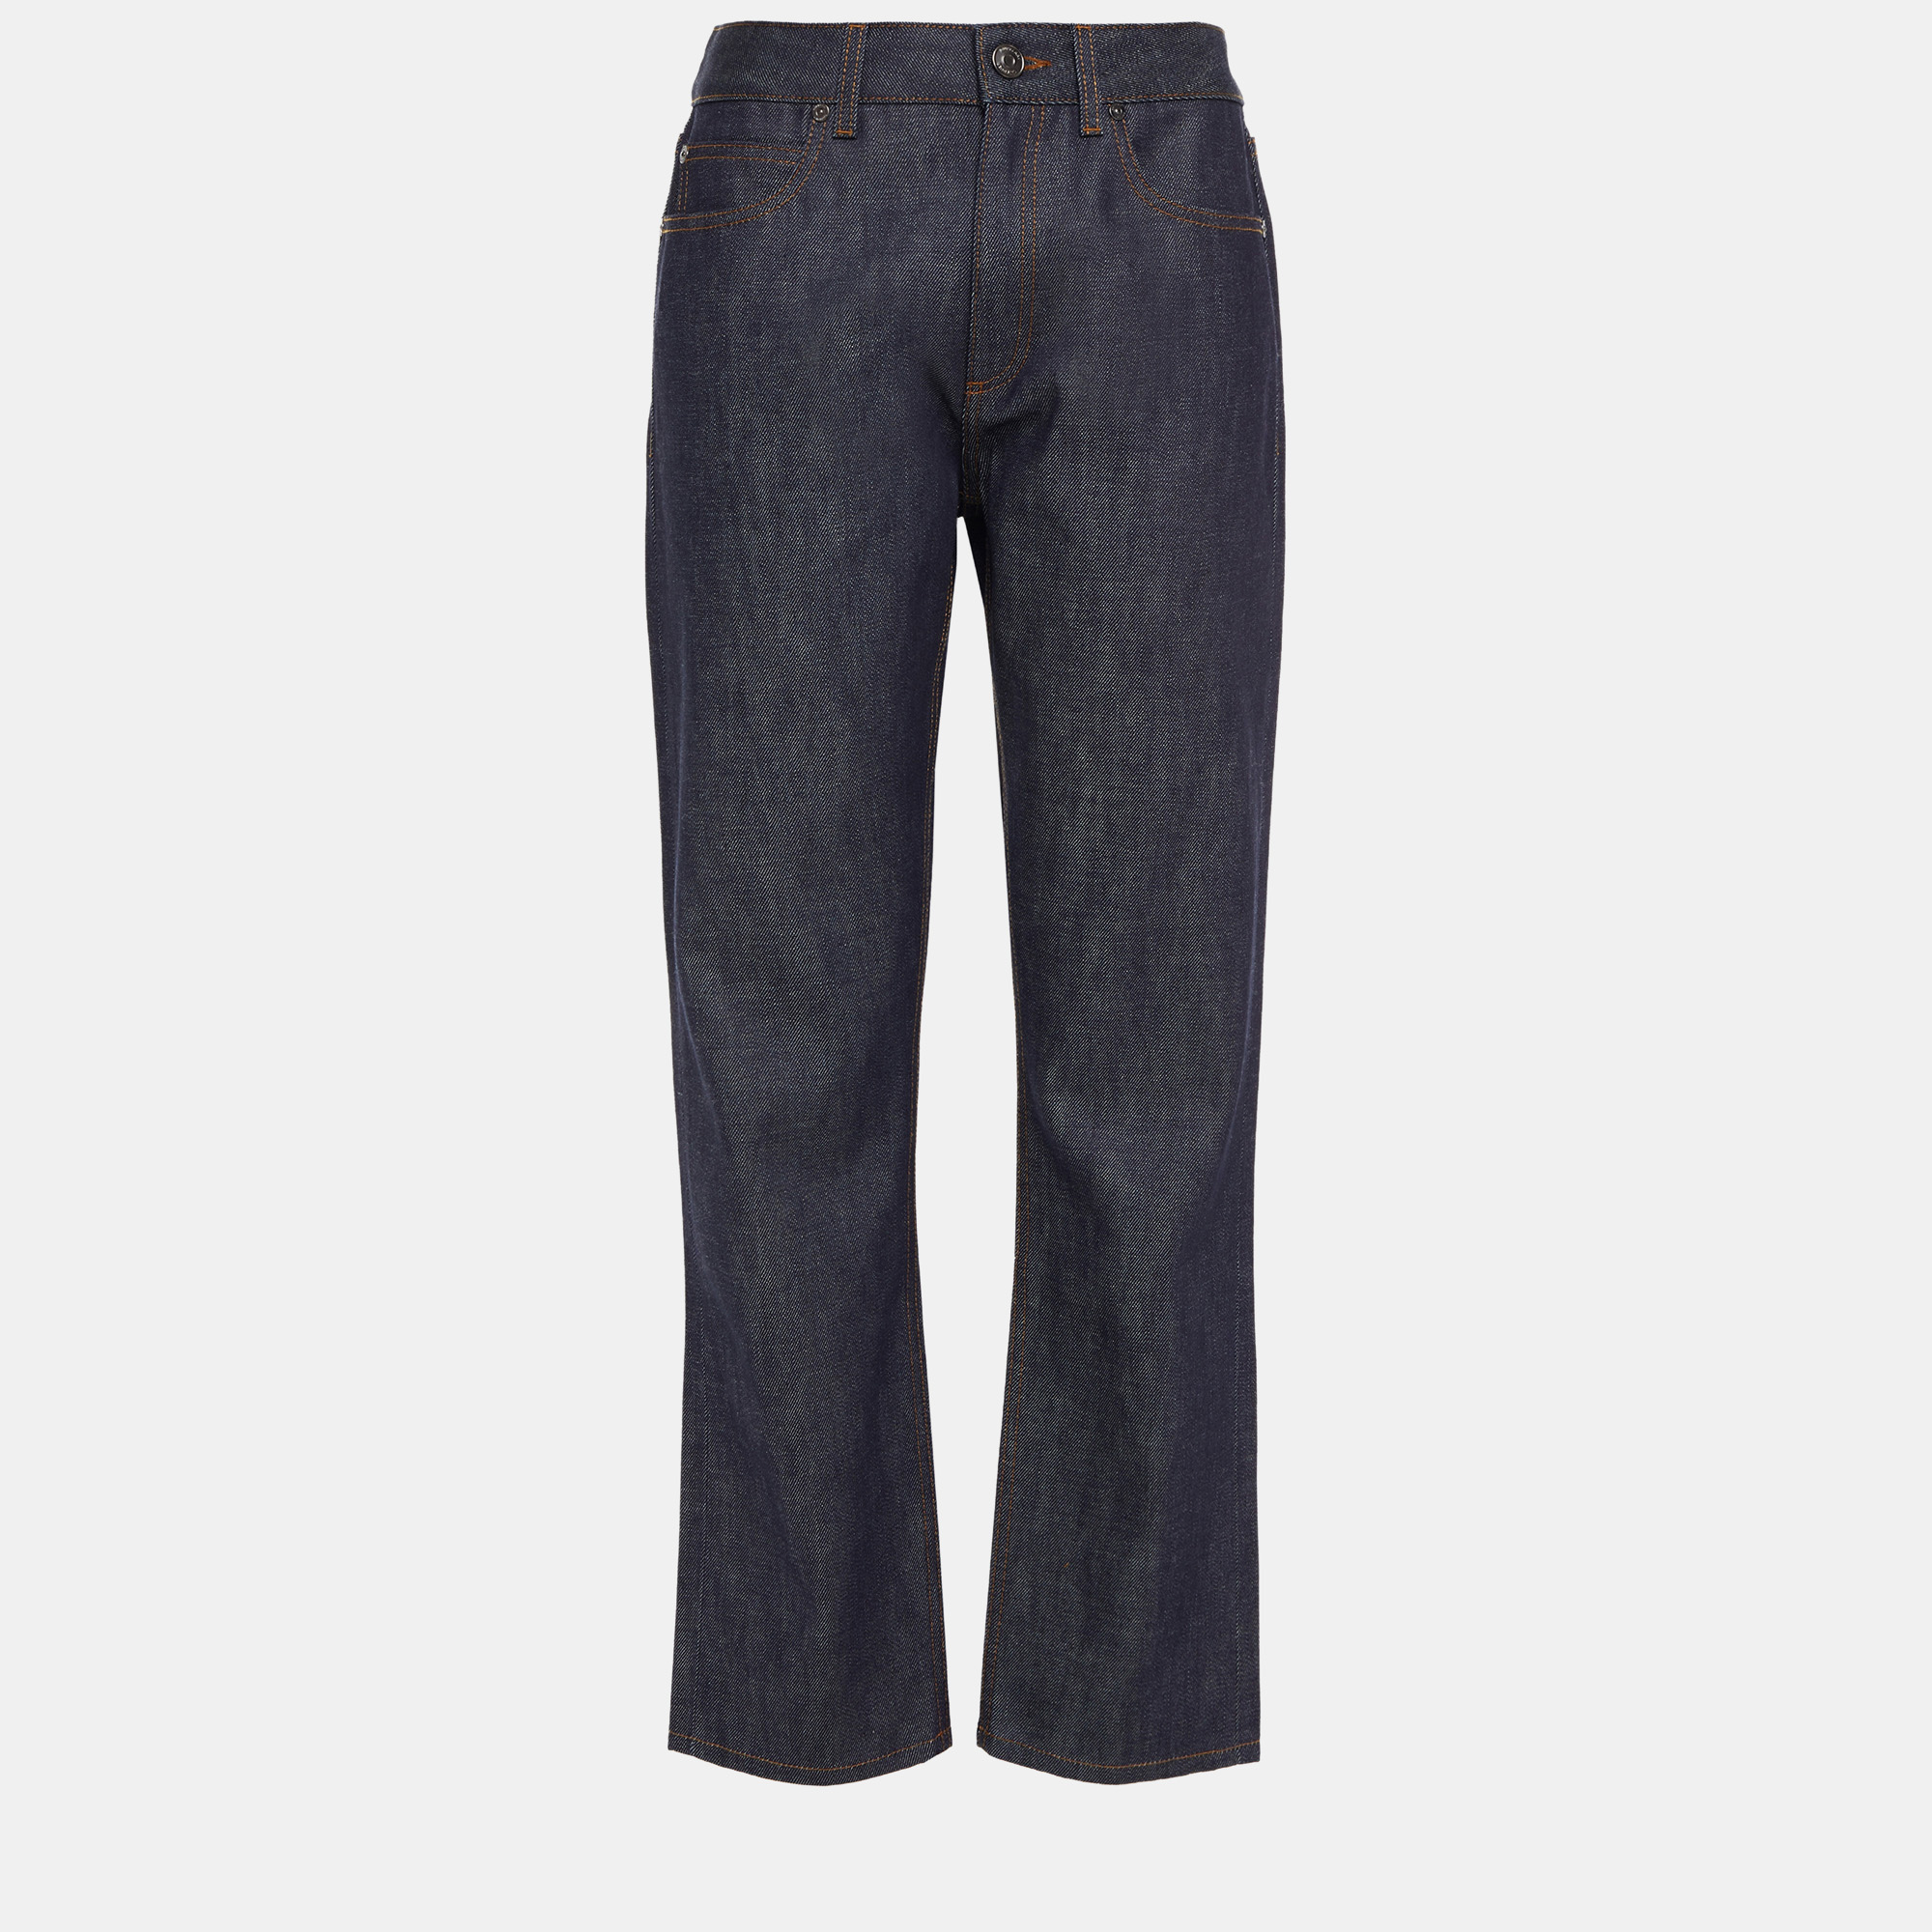 Burberry cotton straight leg jeans 30